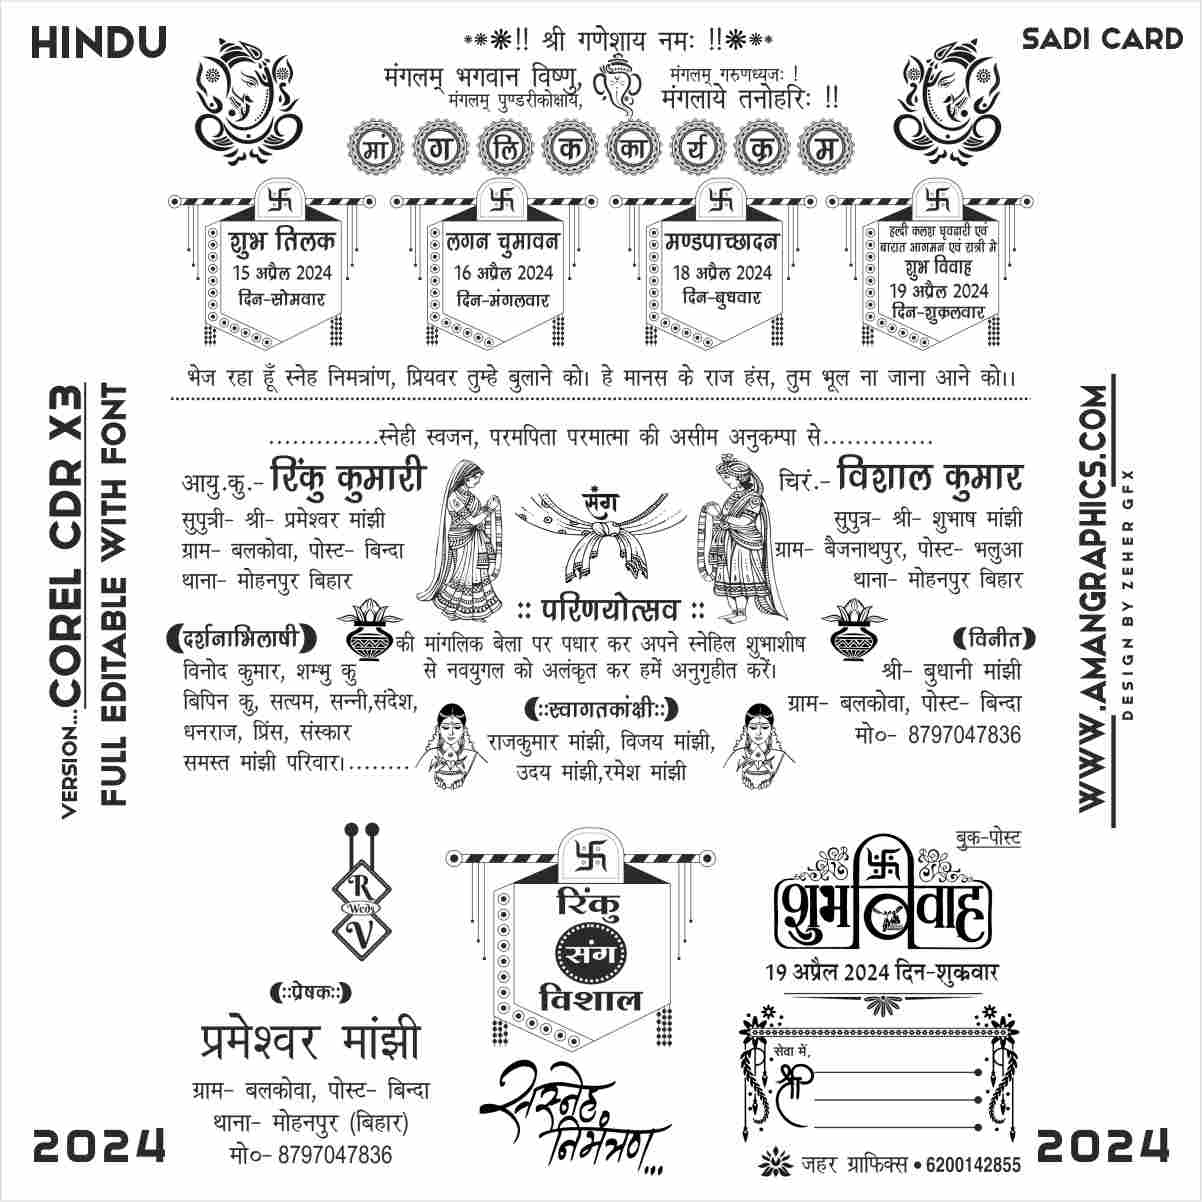 Hindu Wedding Card New Design 2024 Cdr FIle WEDDING CARD WEDDING CARD HINDI